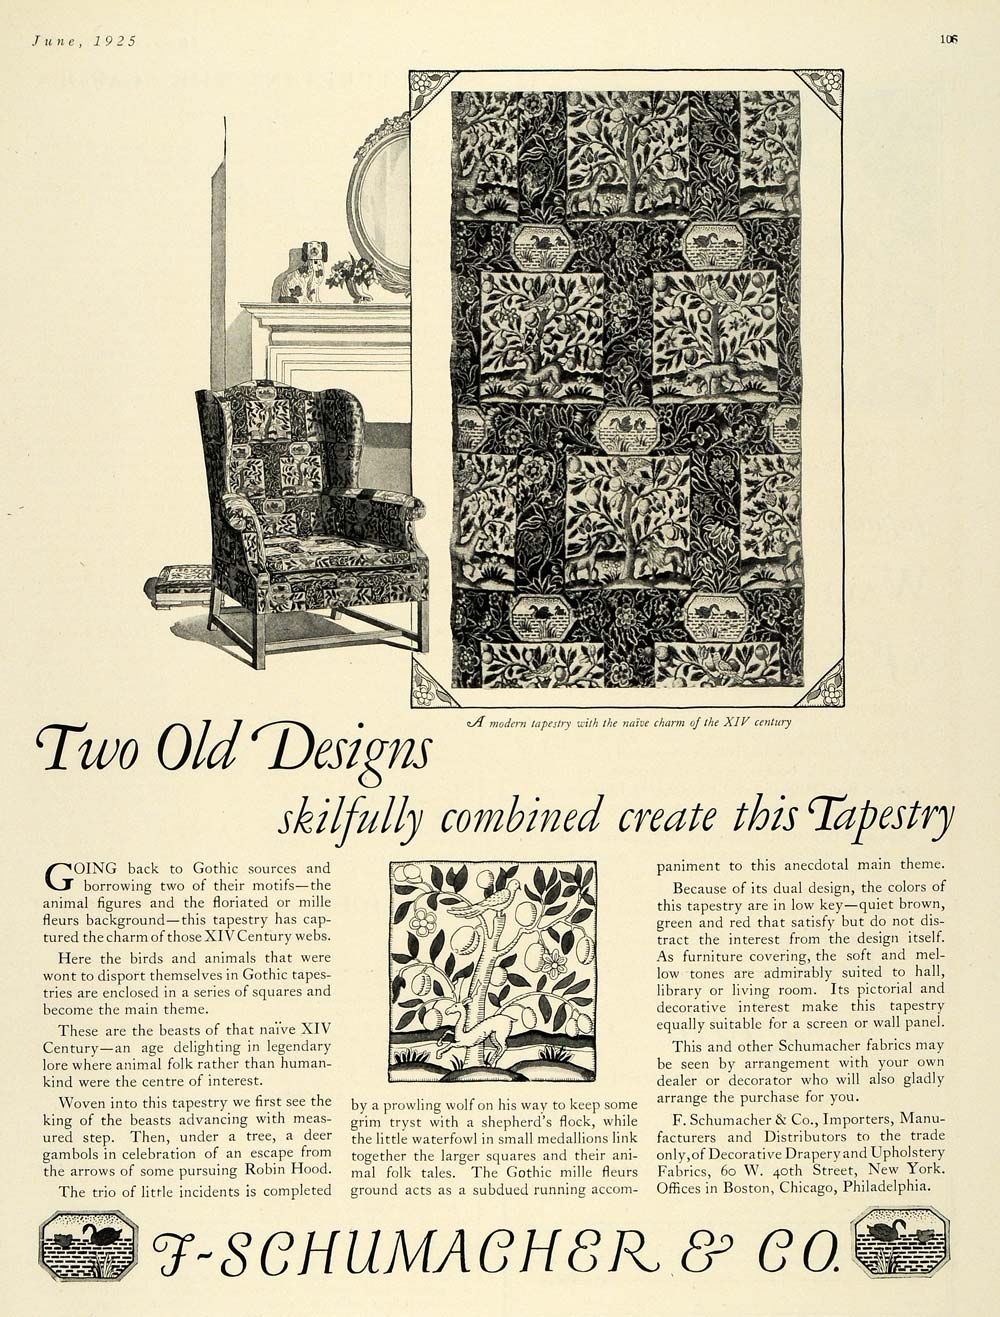 1924 Ad F. Schumacher Design Tapestry Home Decor Chair - ORIGINAL HG1